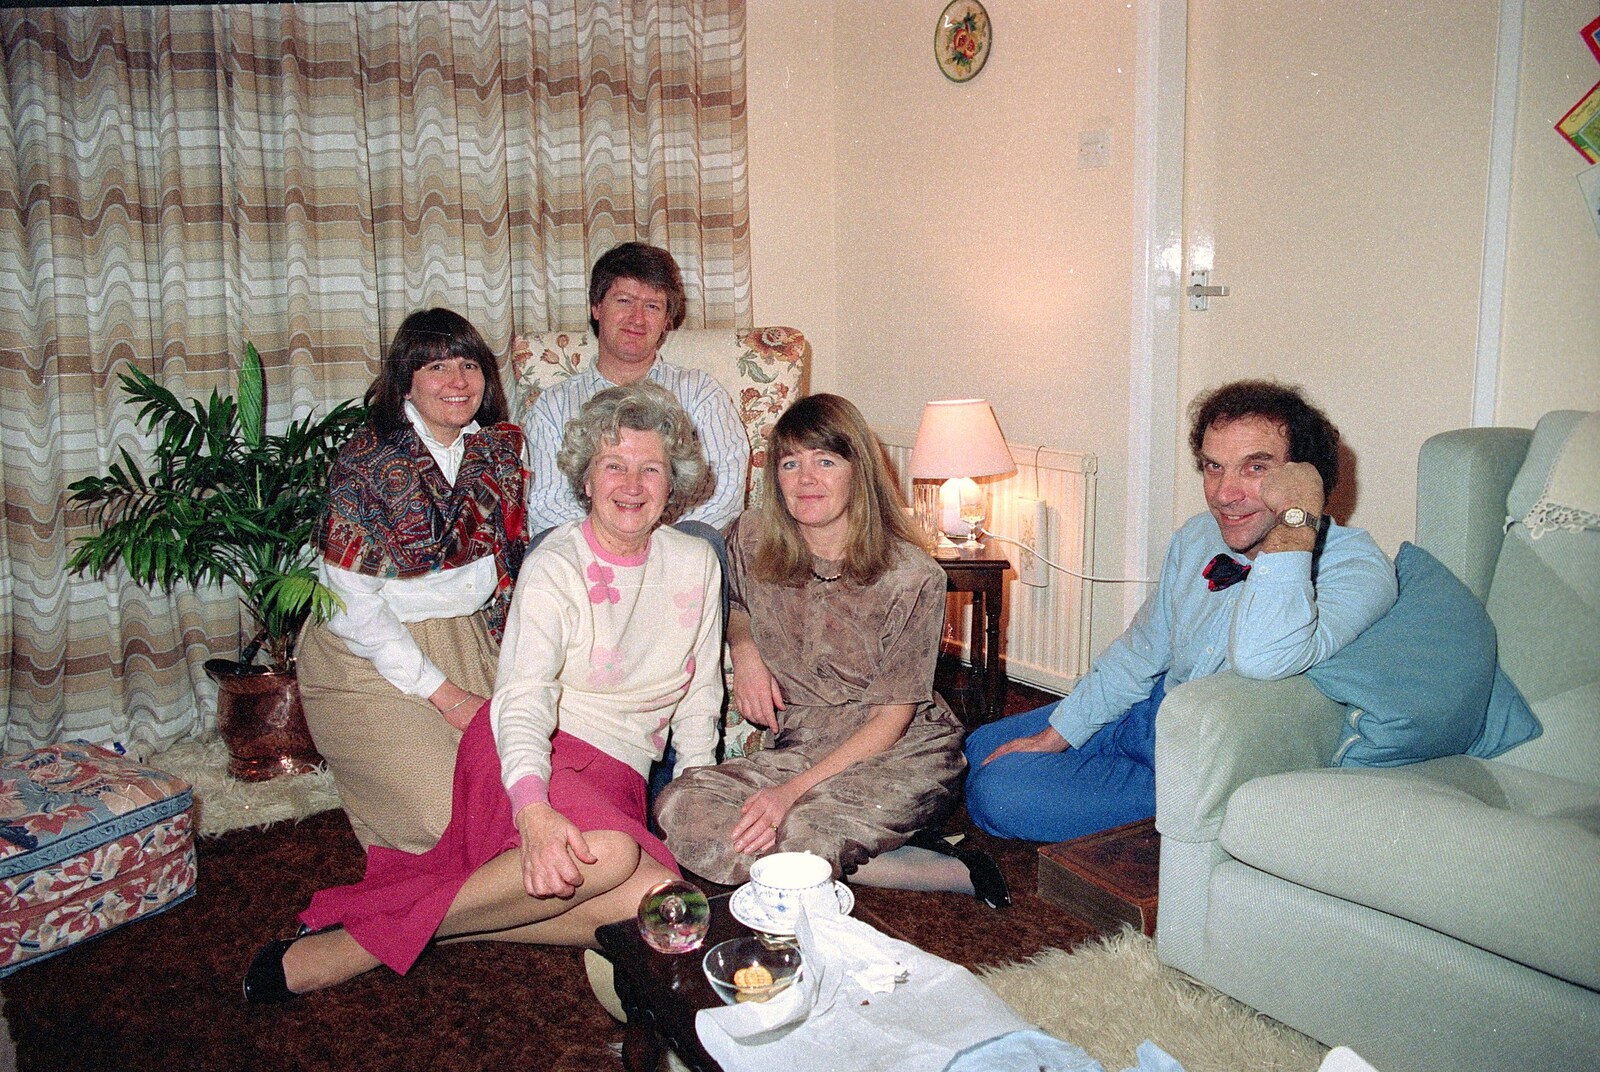 Caroline, Grandmother, Neil, Mother and Mike from Christmas at Pitt Farm, Harbertonford, Devon - 25th December 1988